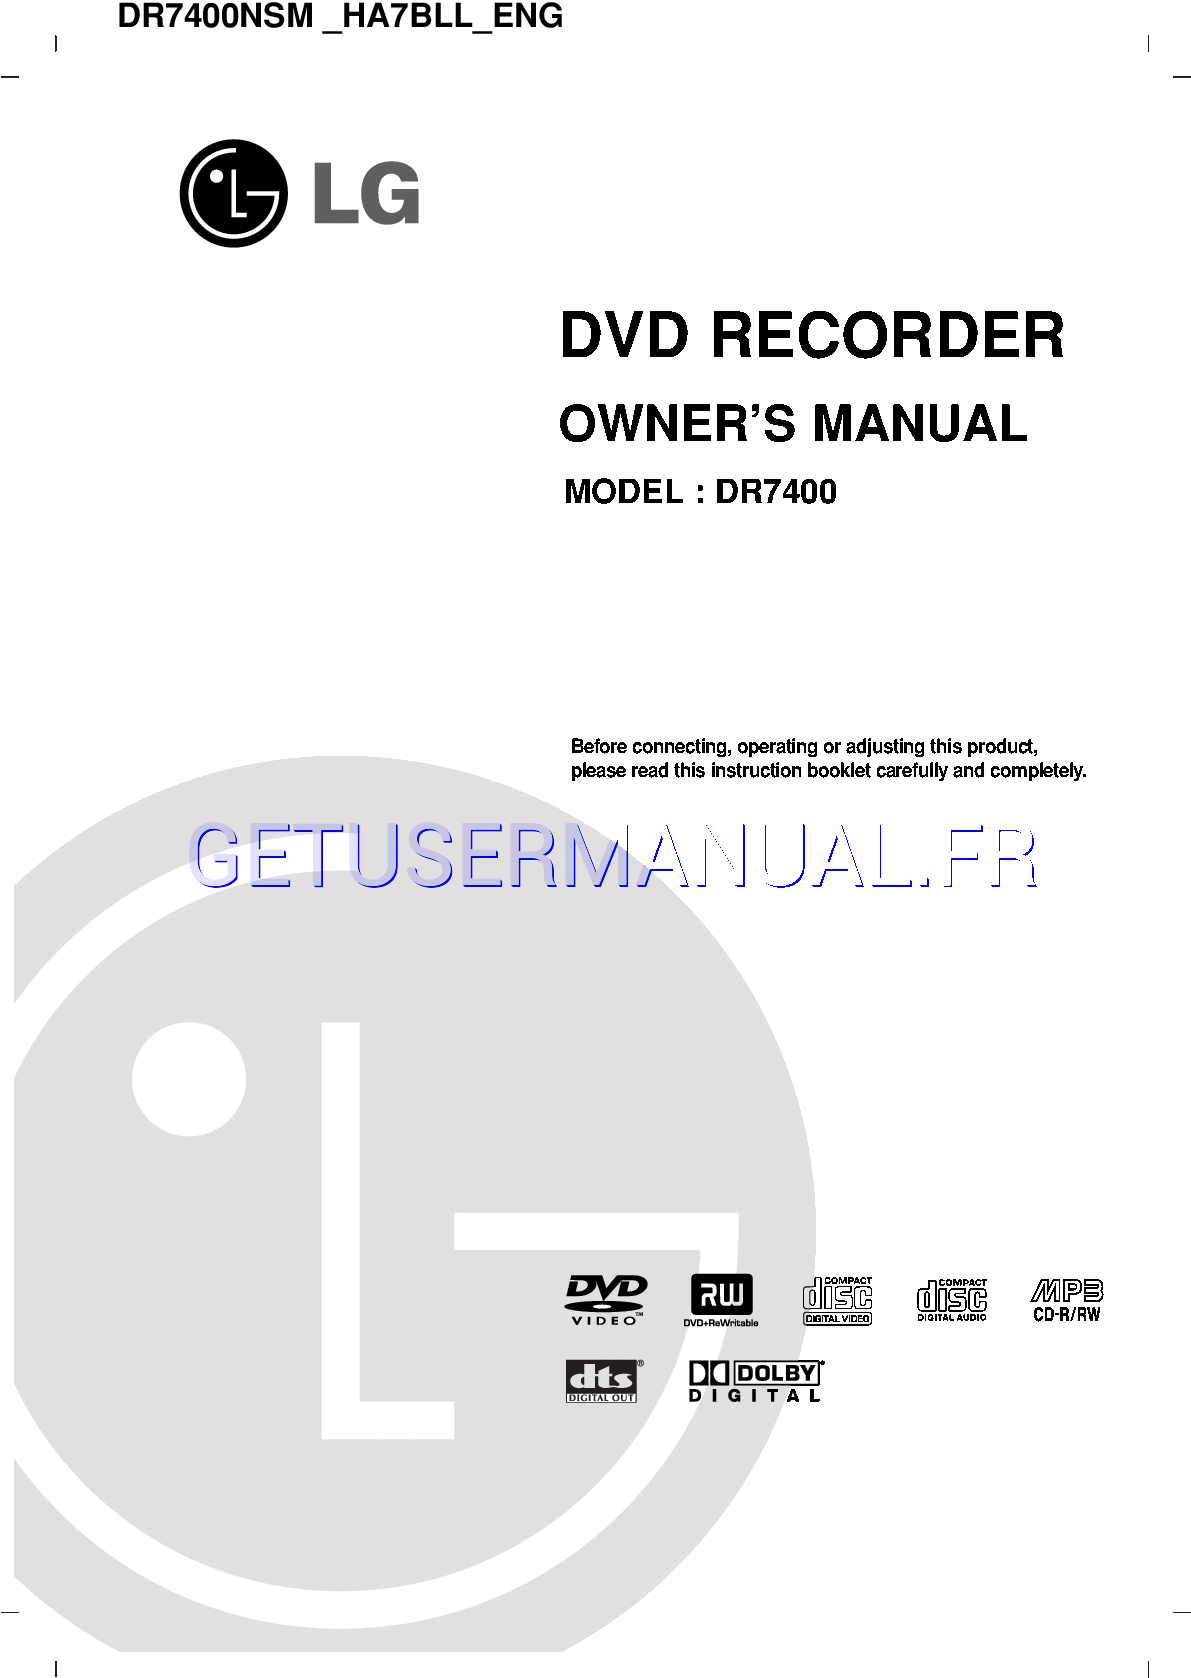 User Guide (1240x1754)